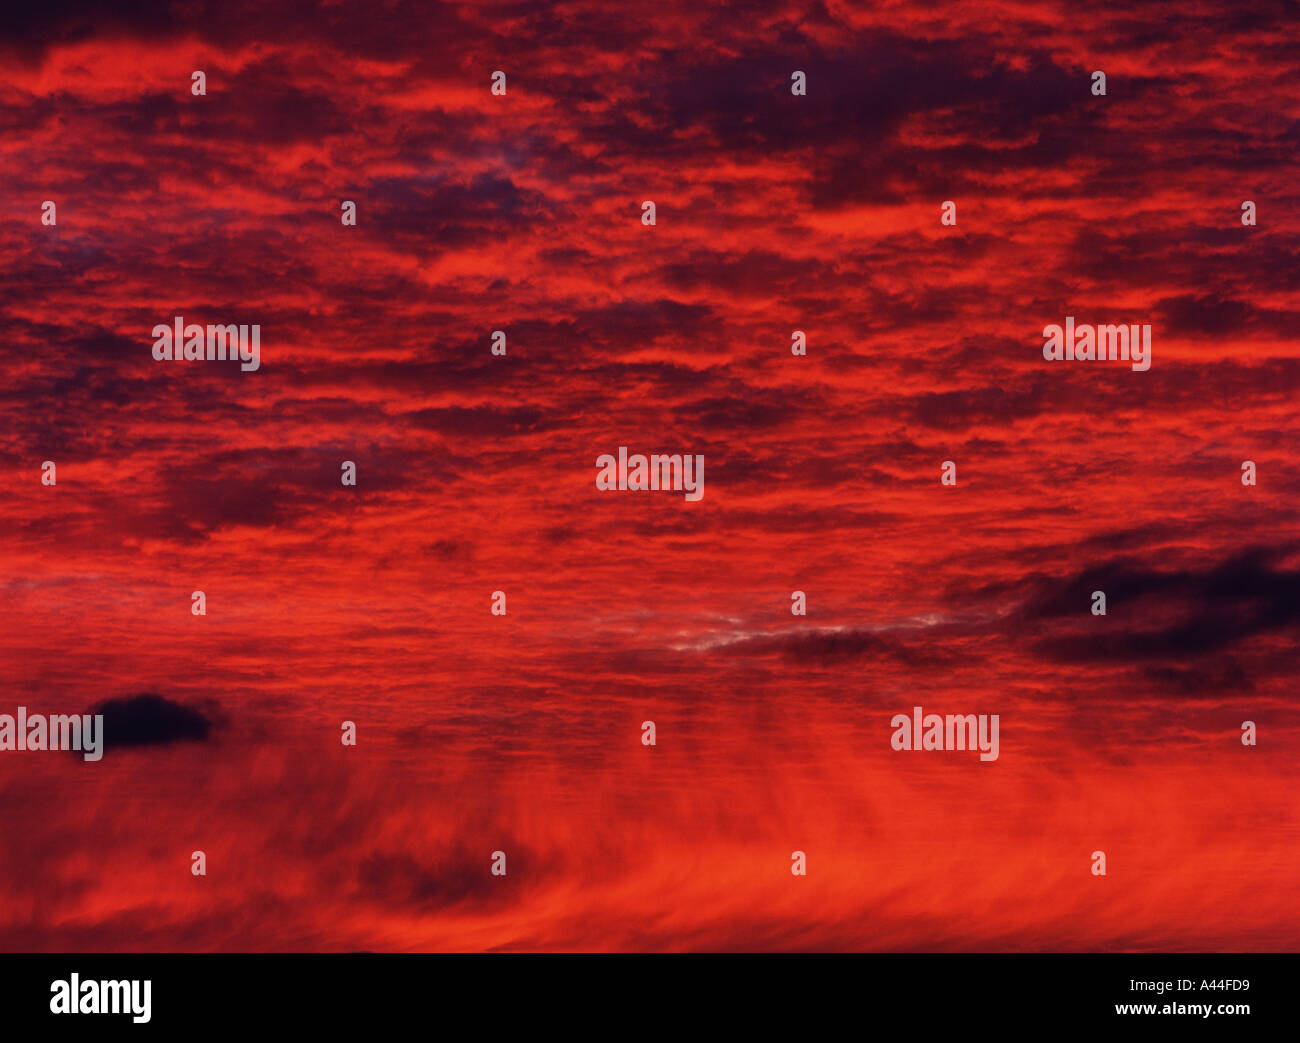 Dh nuvole SUNRISE METEO Whispy arrabbiato stormy red sunrise alba Orkney sky cloud drammatico sfondo Foto Stock